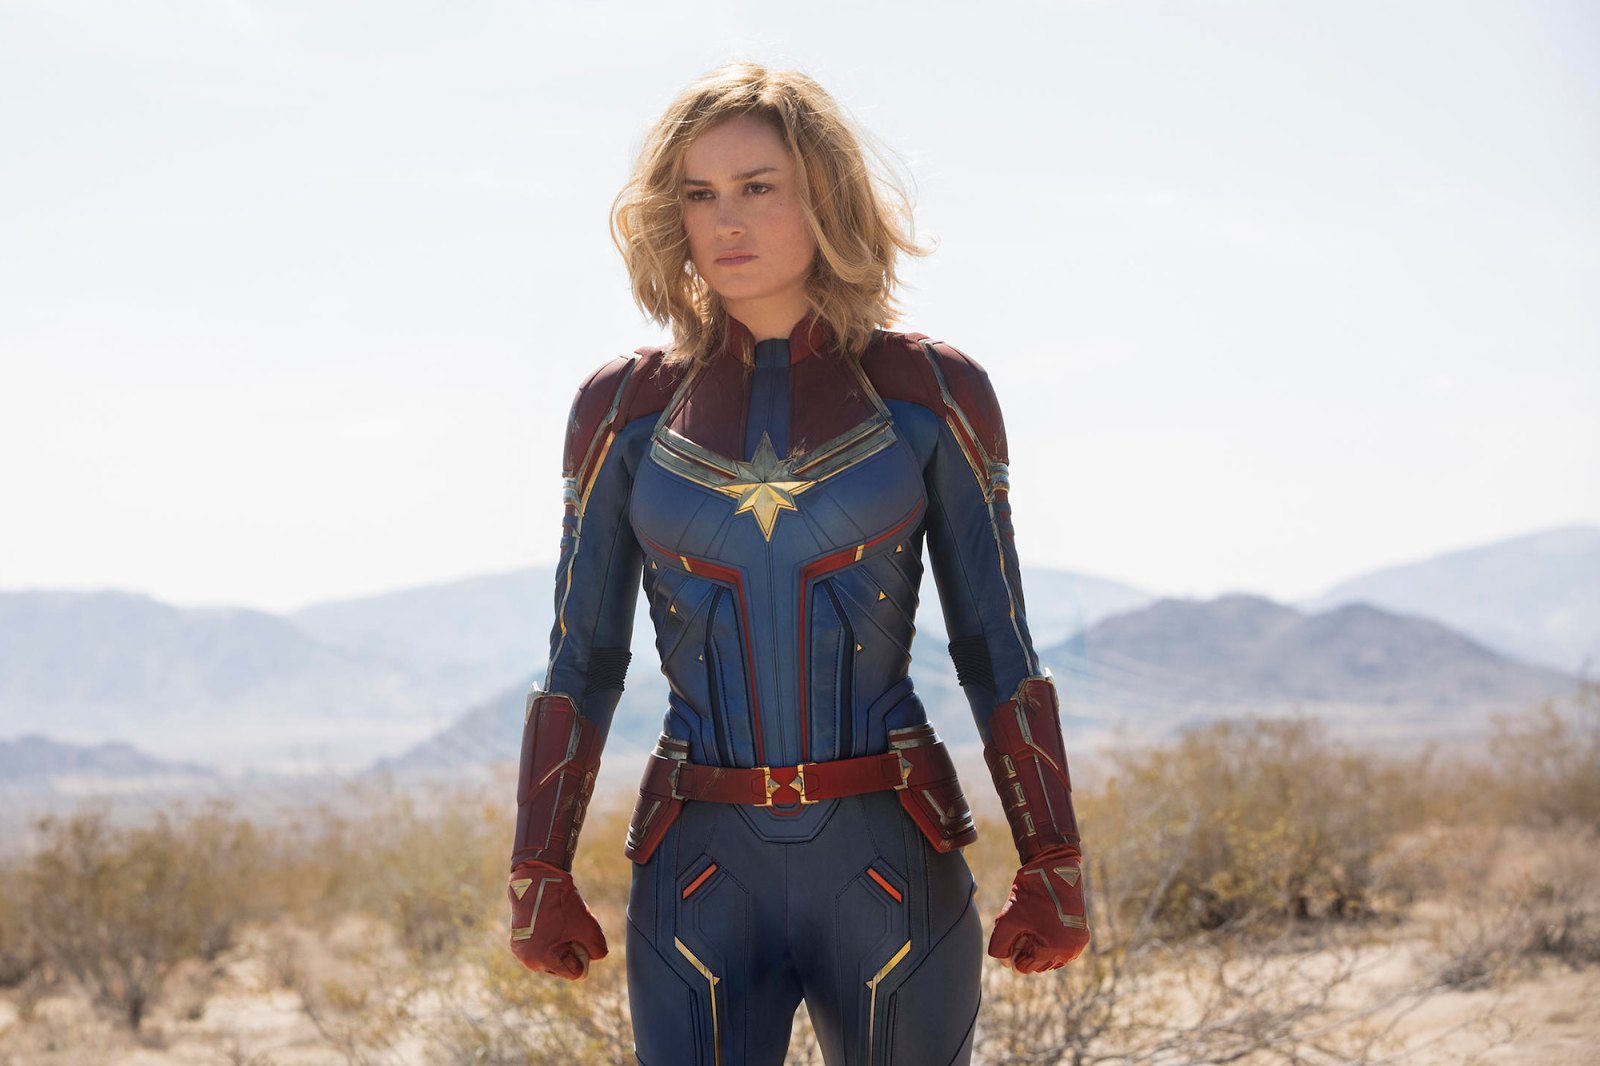 stars as superheroes Brie Larson